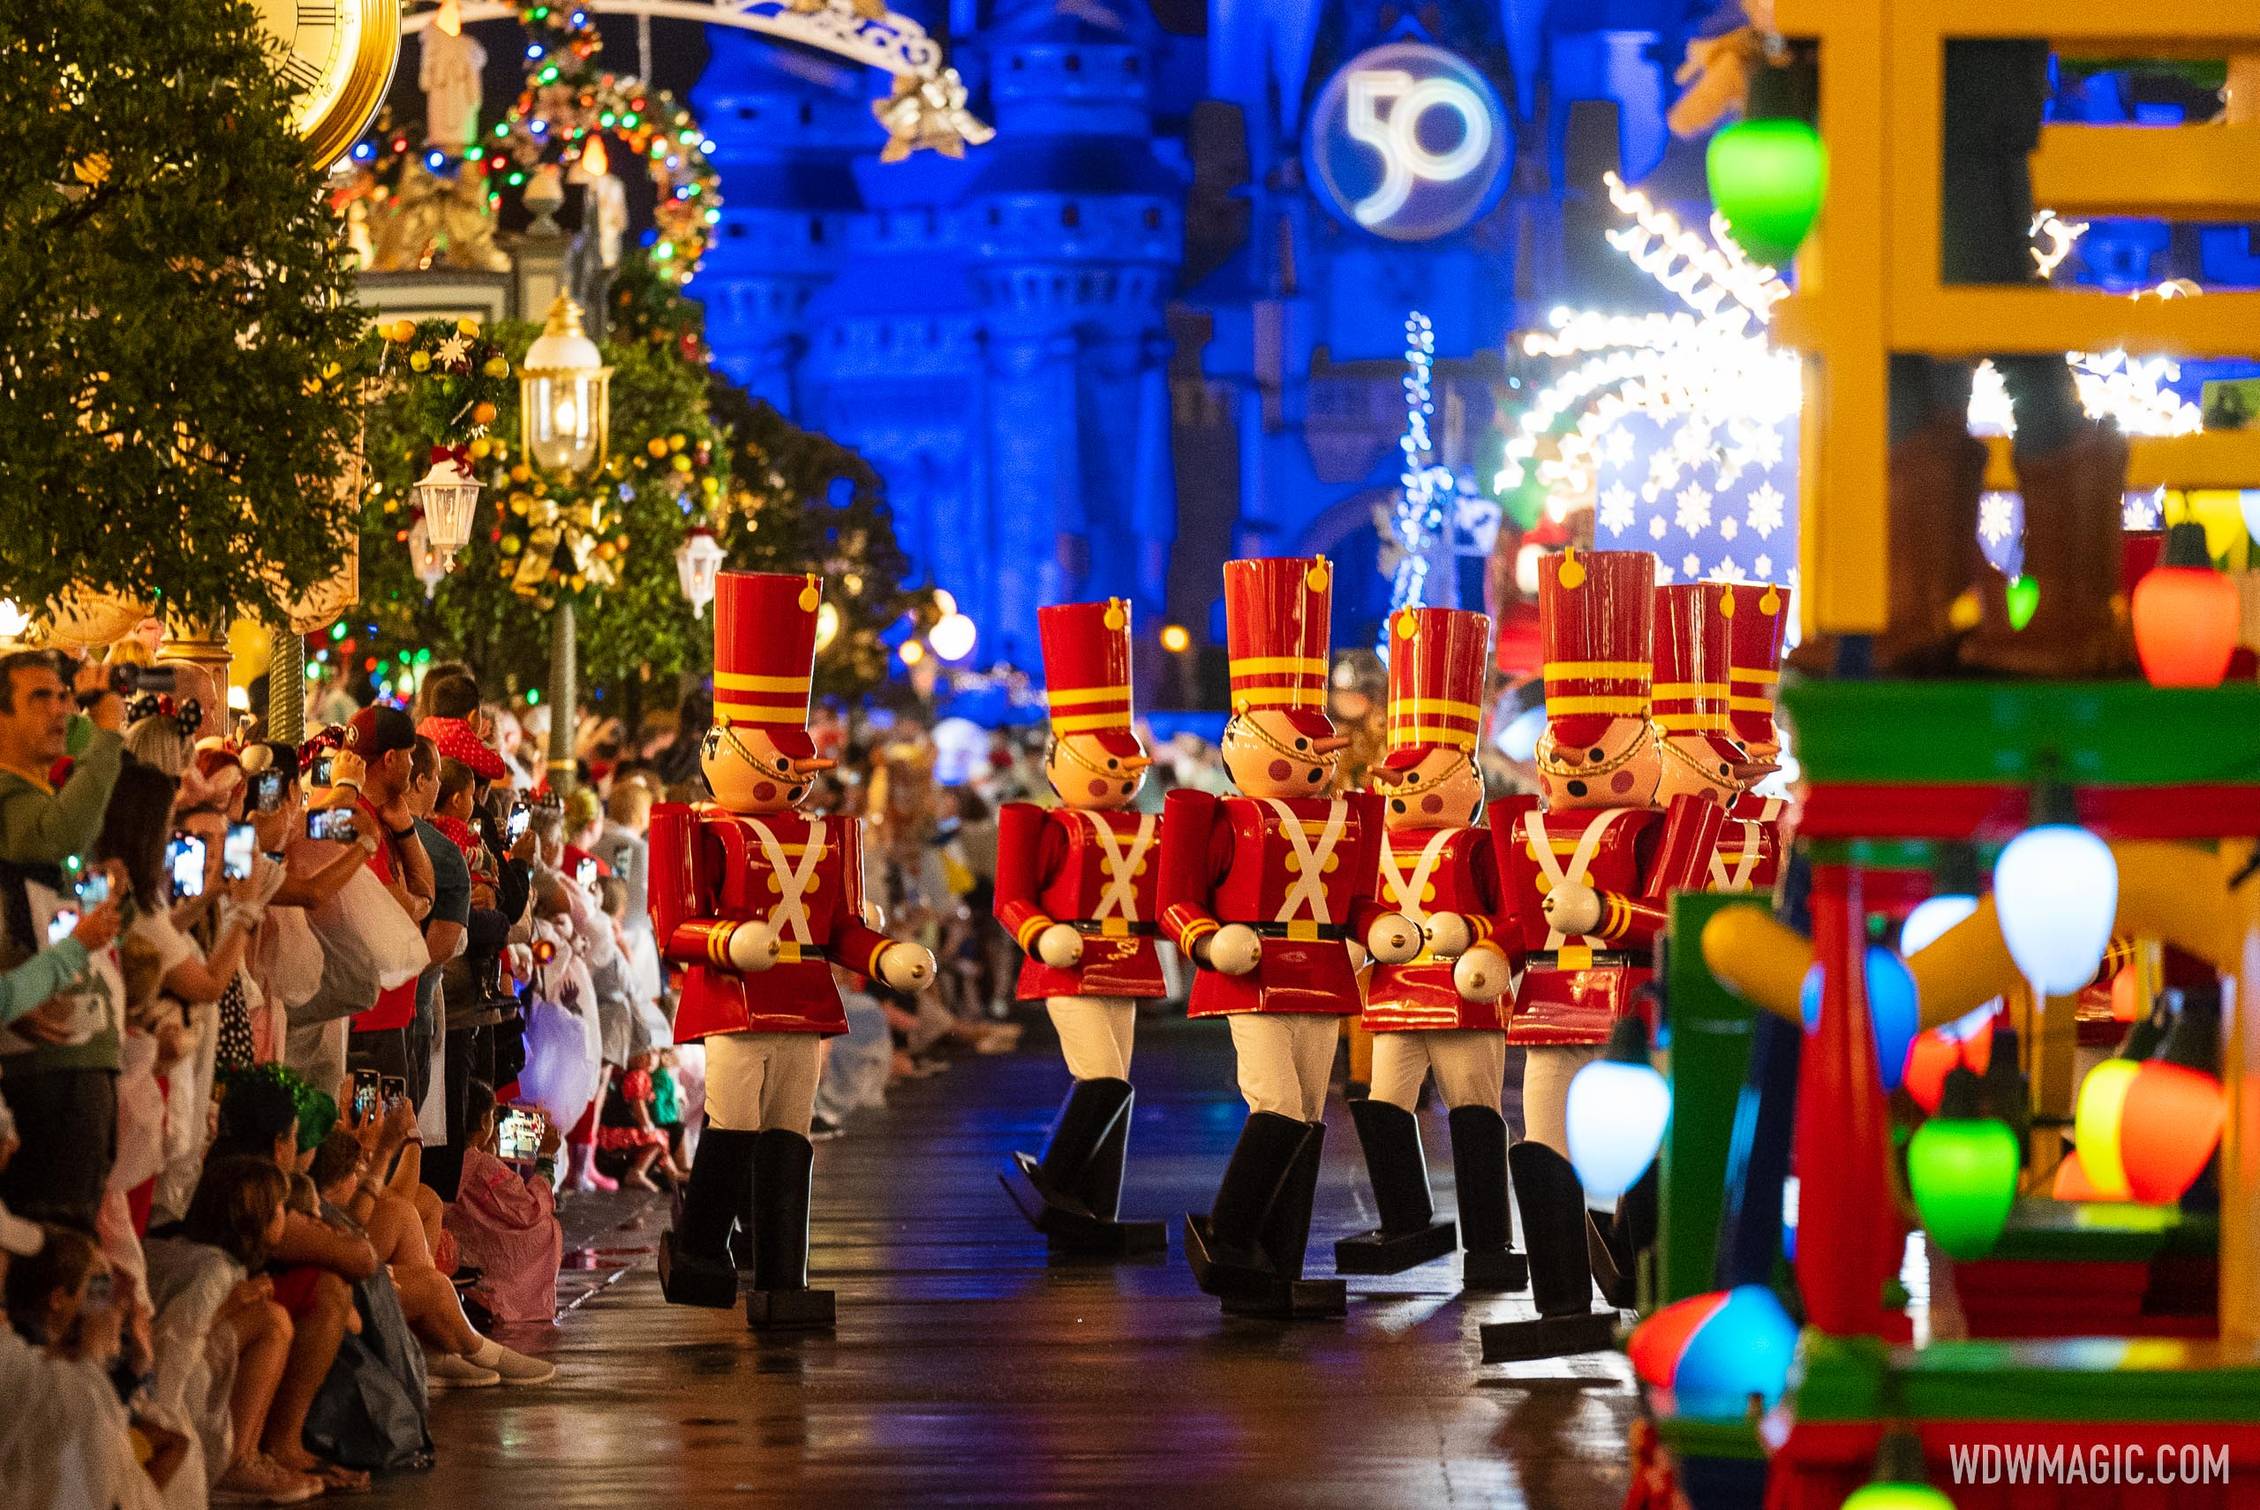 Mickeys-Once-Upon-a-Christmastime-Parade_Full_49287.jpg